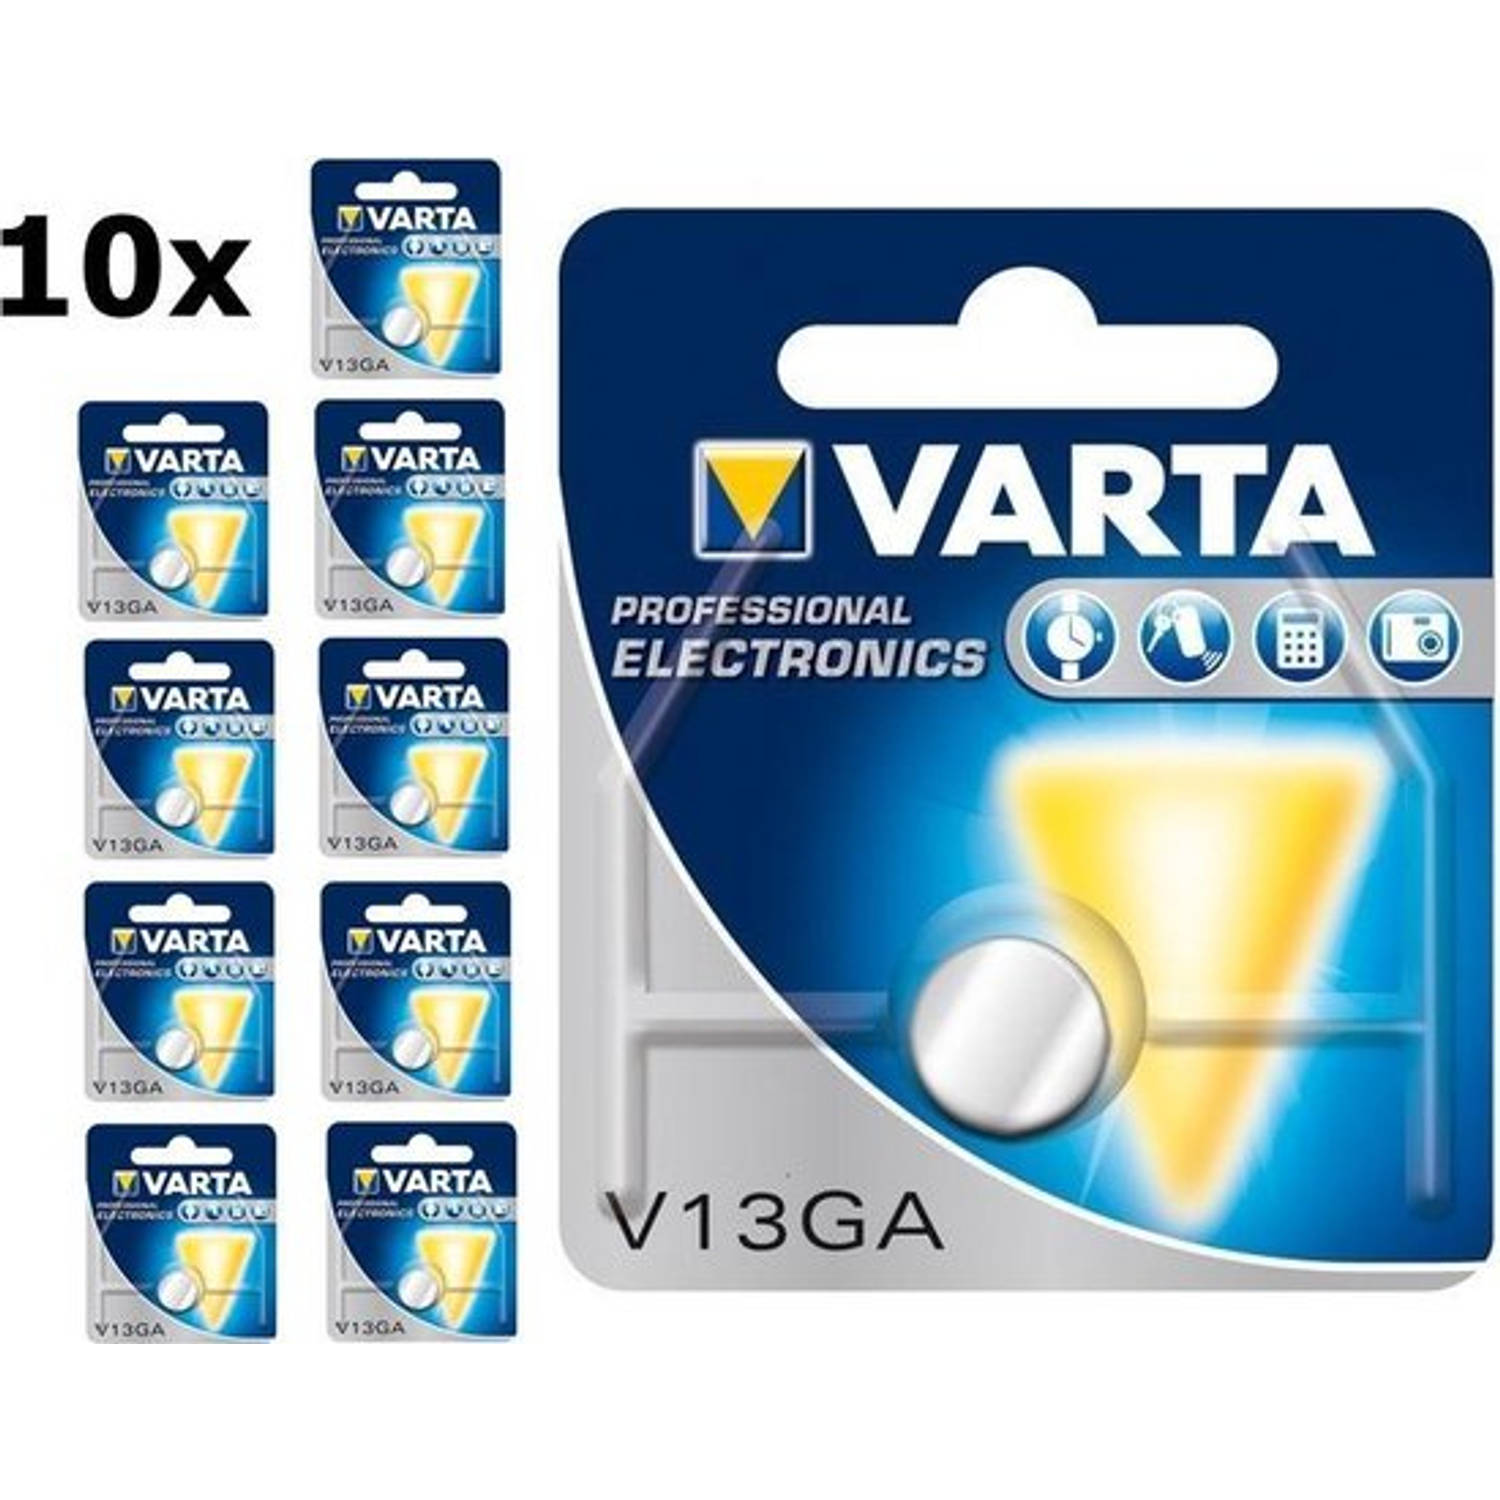 Varta V13GA / LR44 / LR1154 125mAh 1.55V Professional Electronics knoopcel batterij - 10 stuks